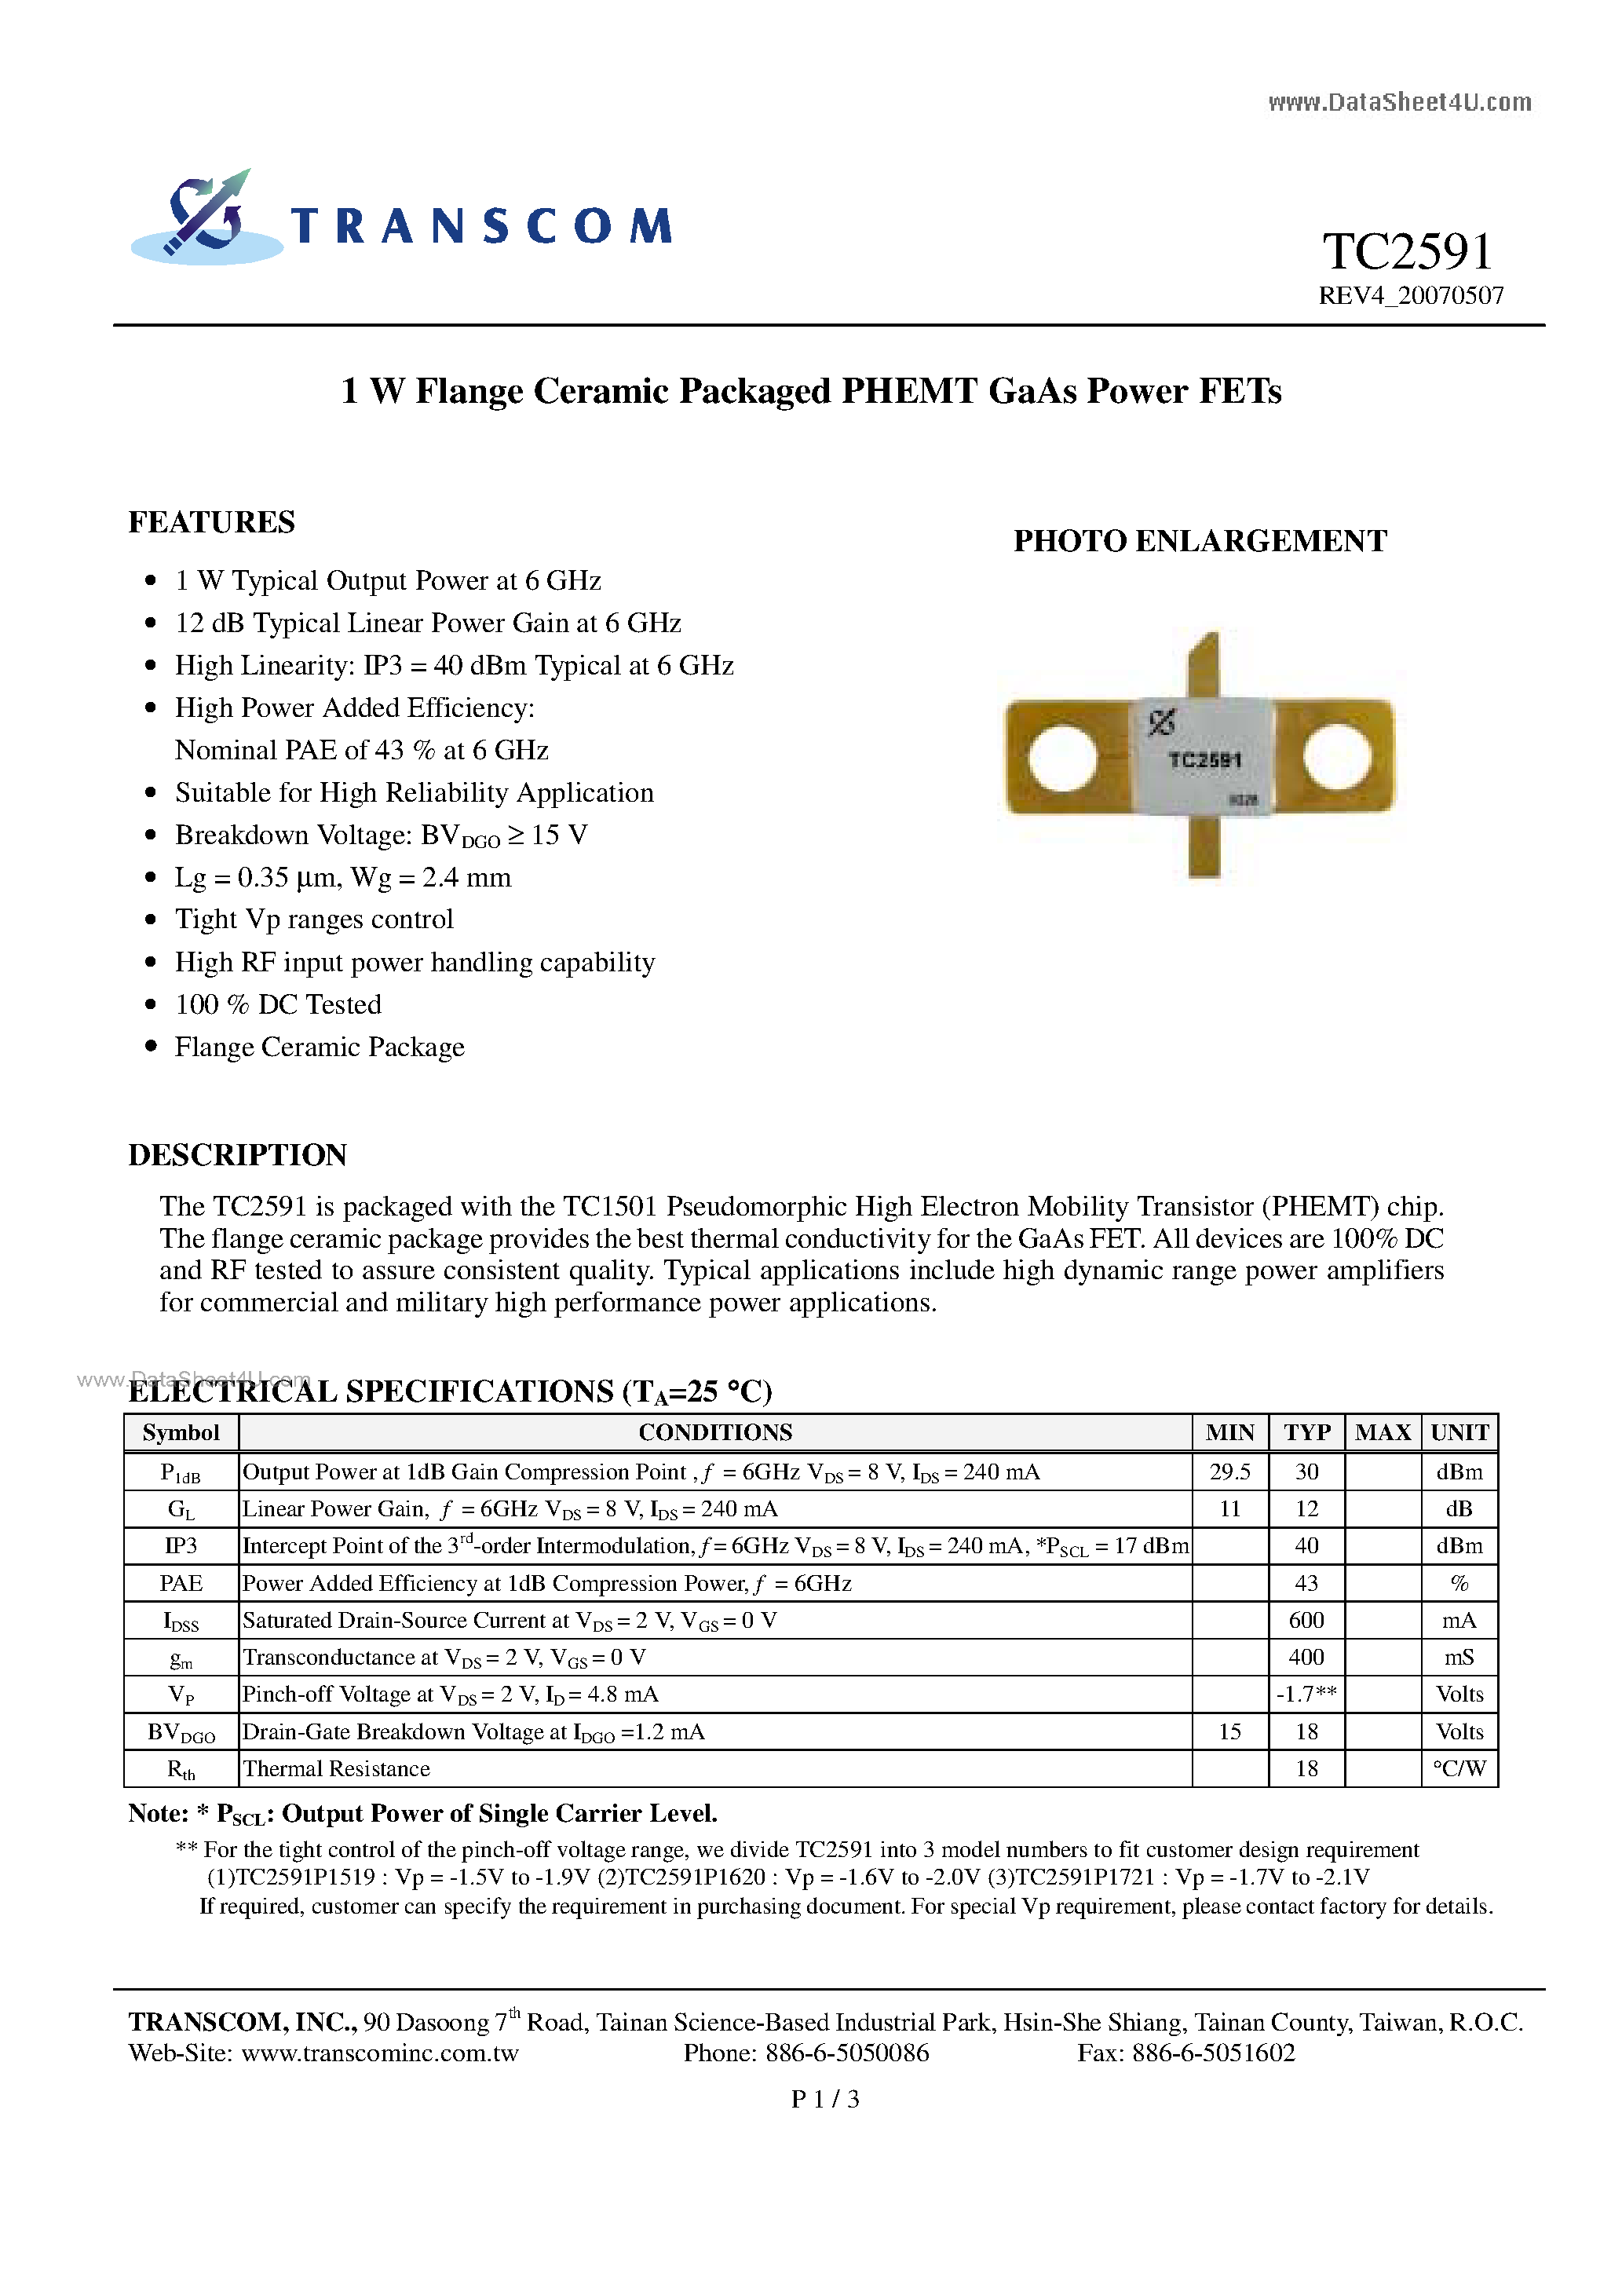 Datasheet TC2591 - 1 W Flange Ceramic Packaged PHEMT GaAs Power FETs page 1